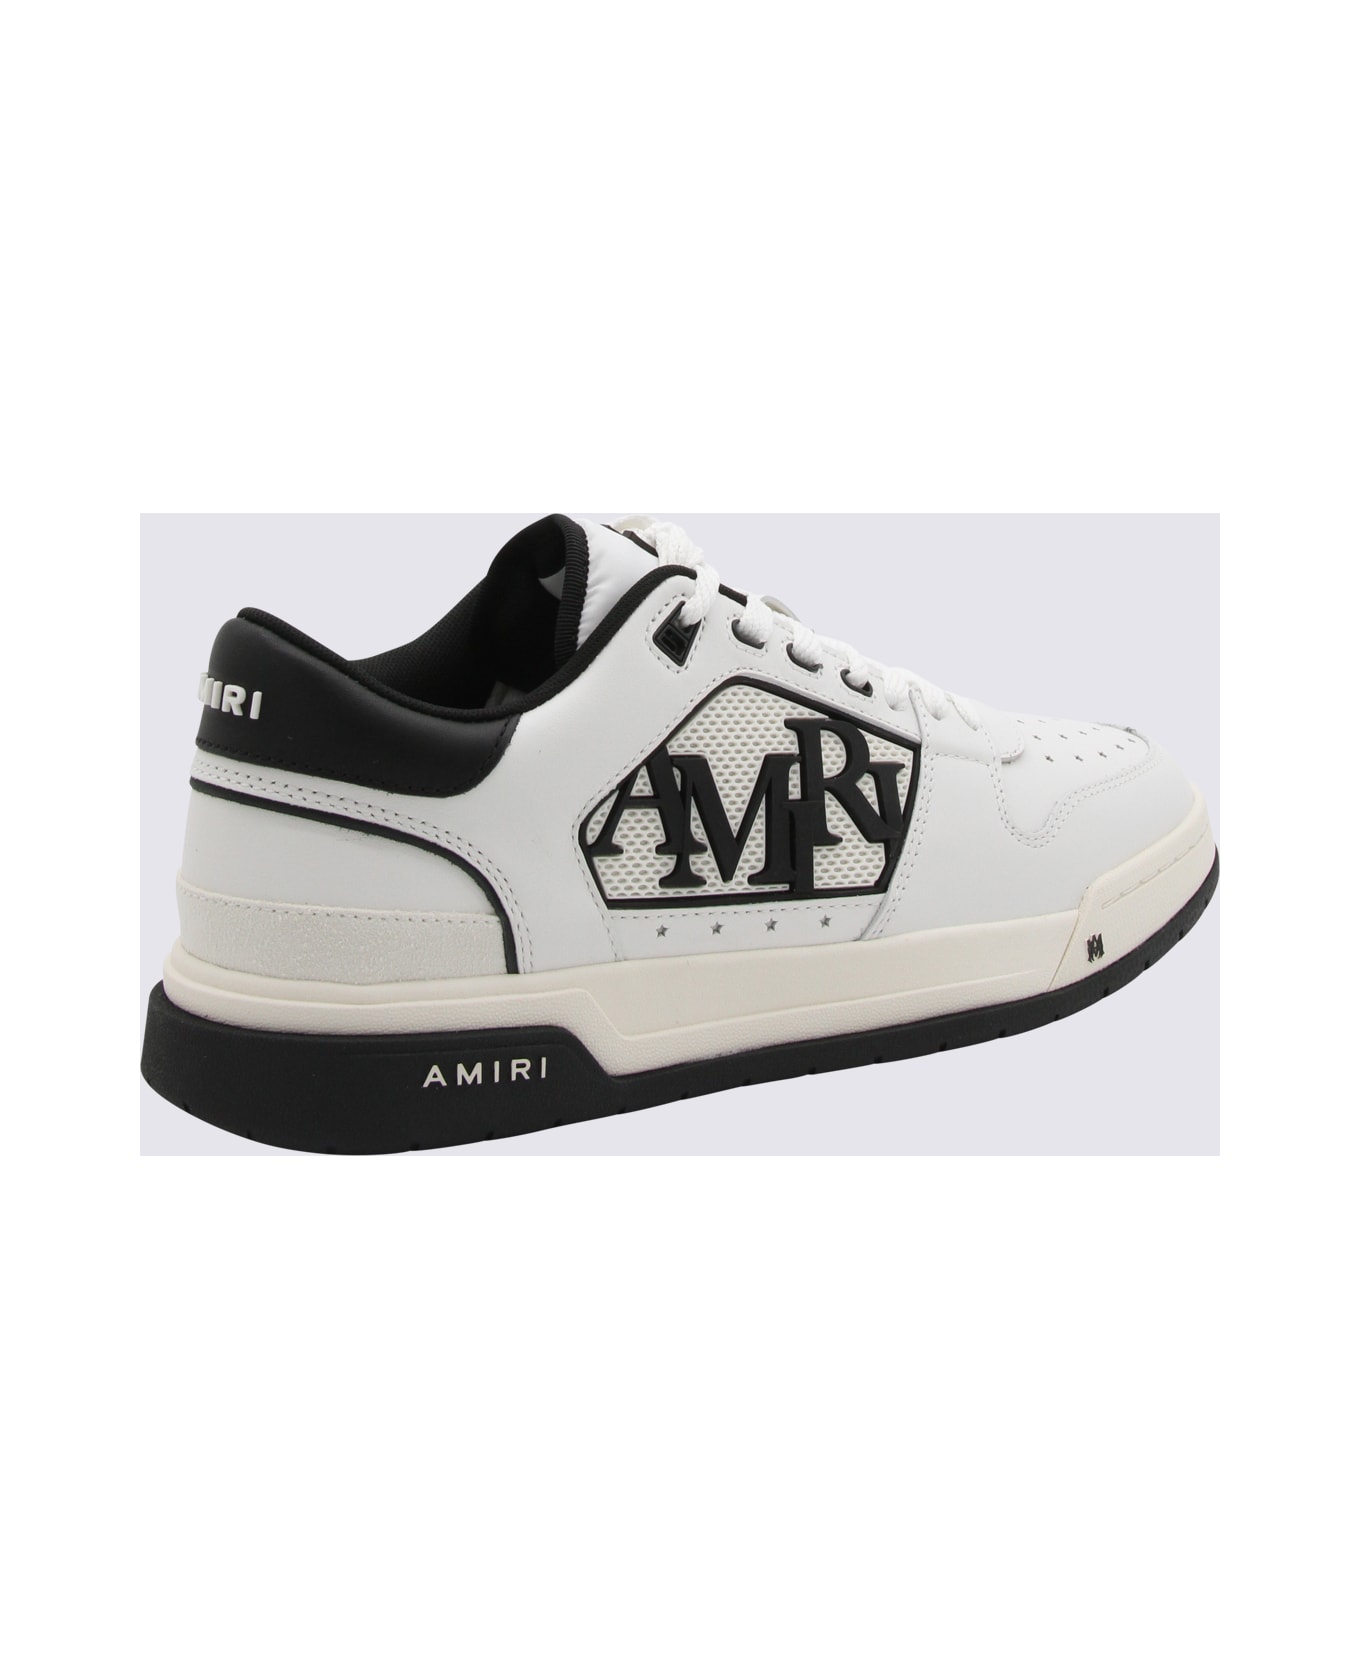 AMIRI White And Black Leather Sneakers - White